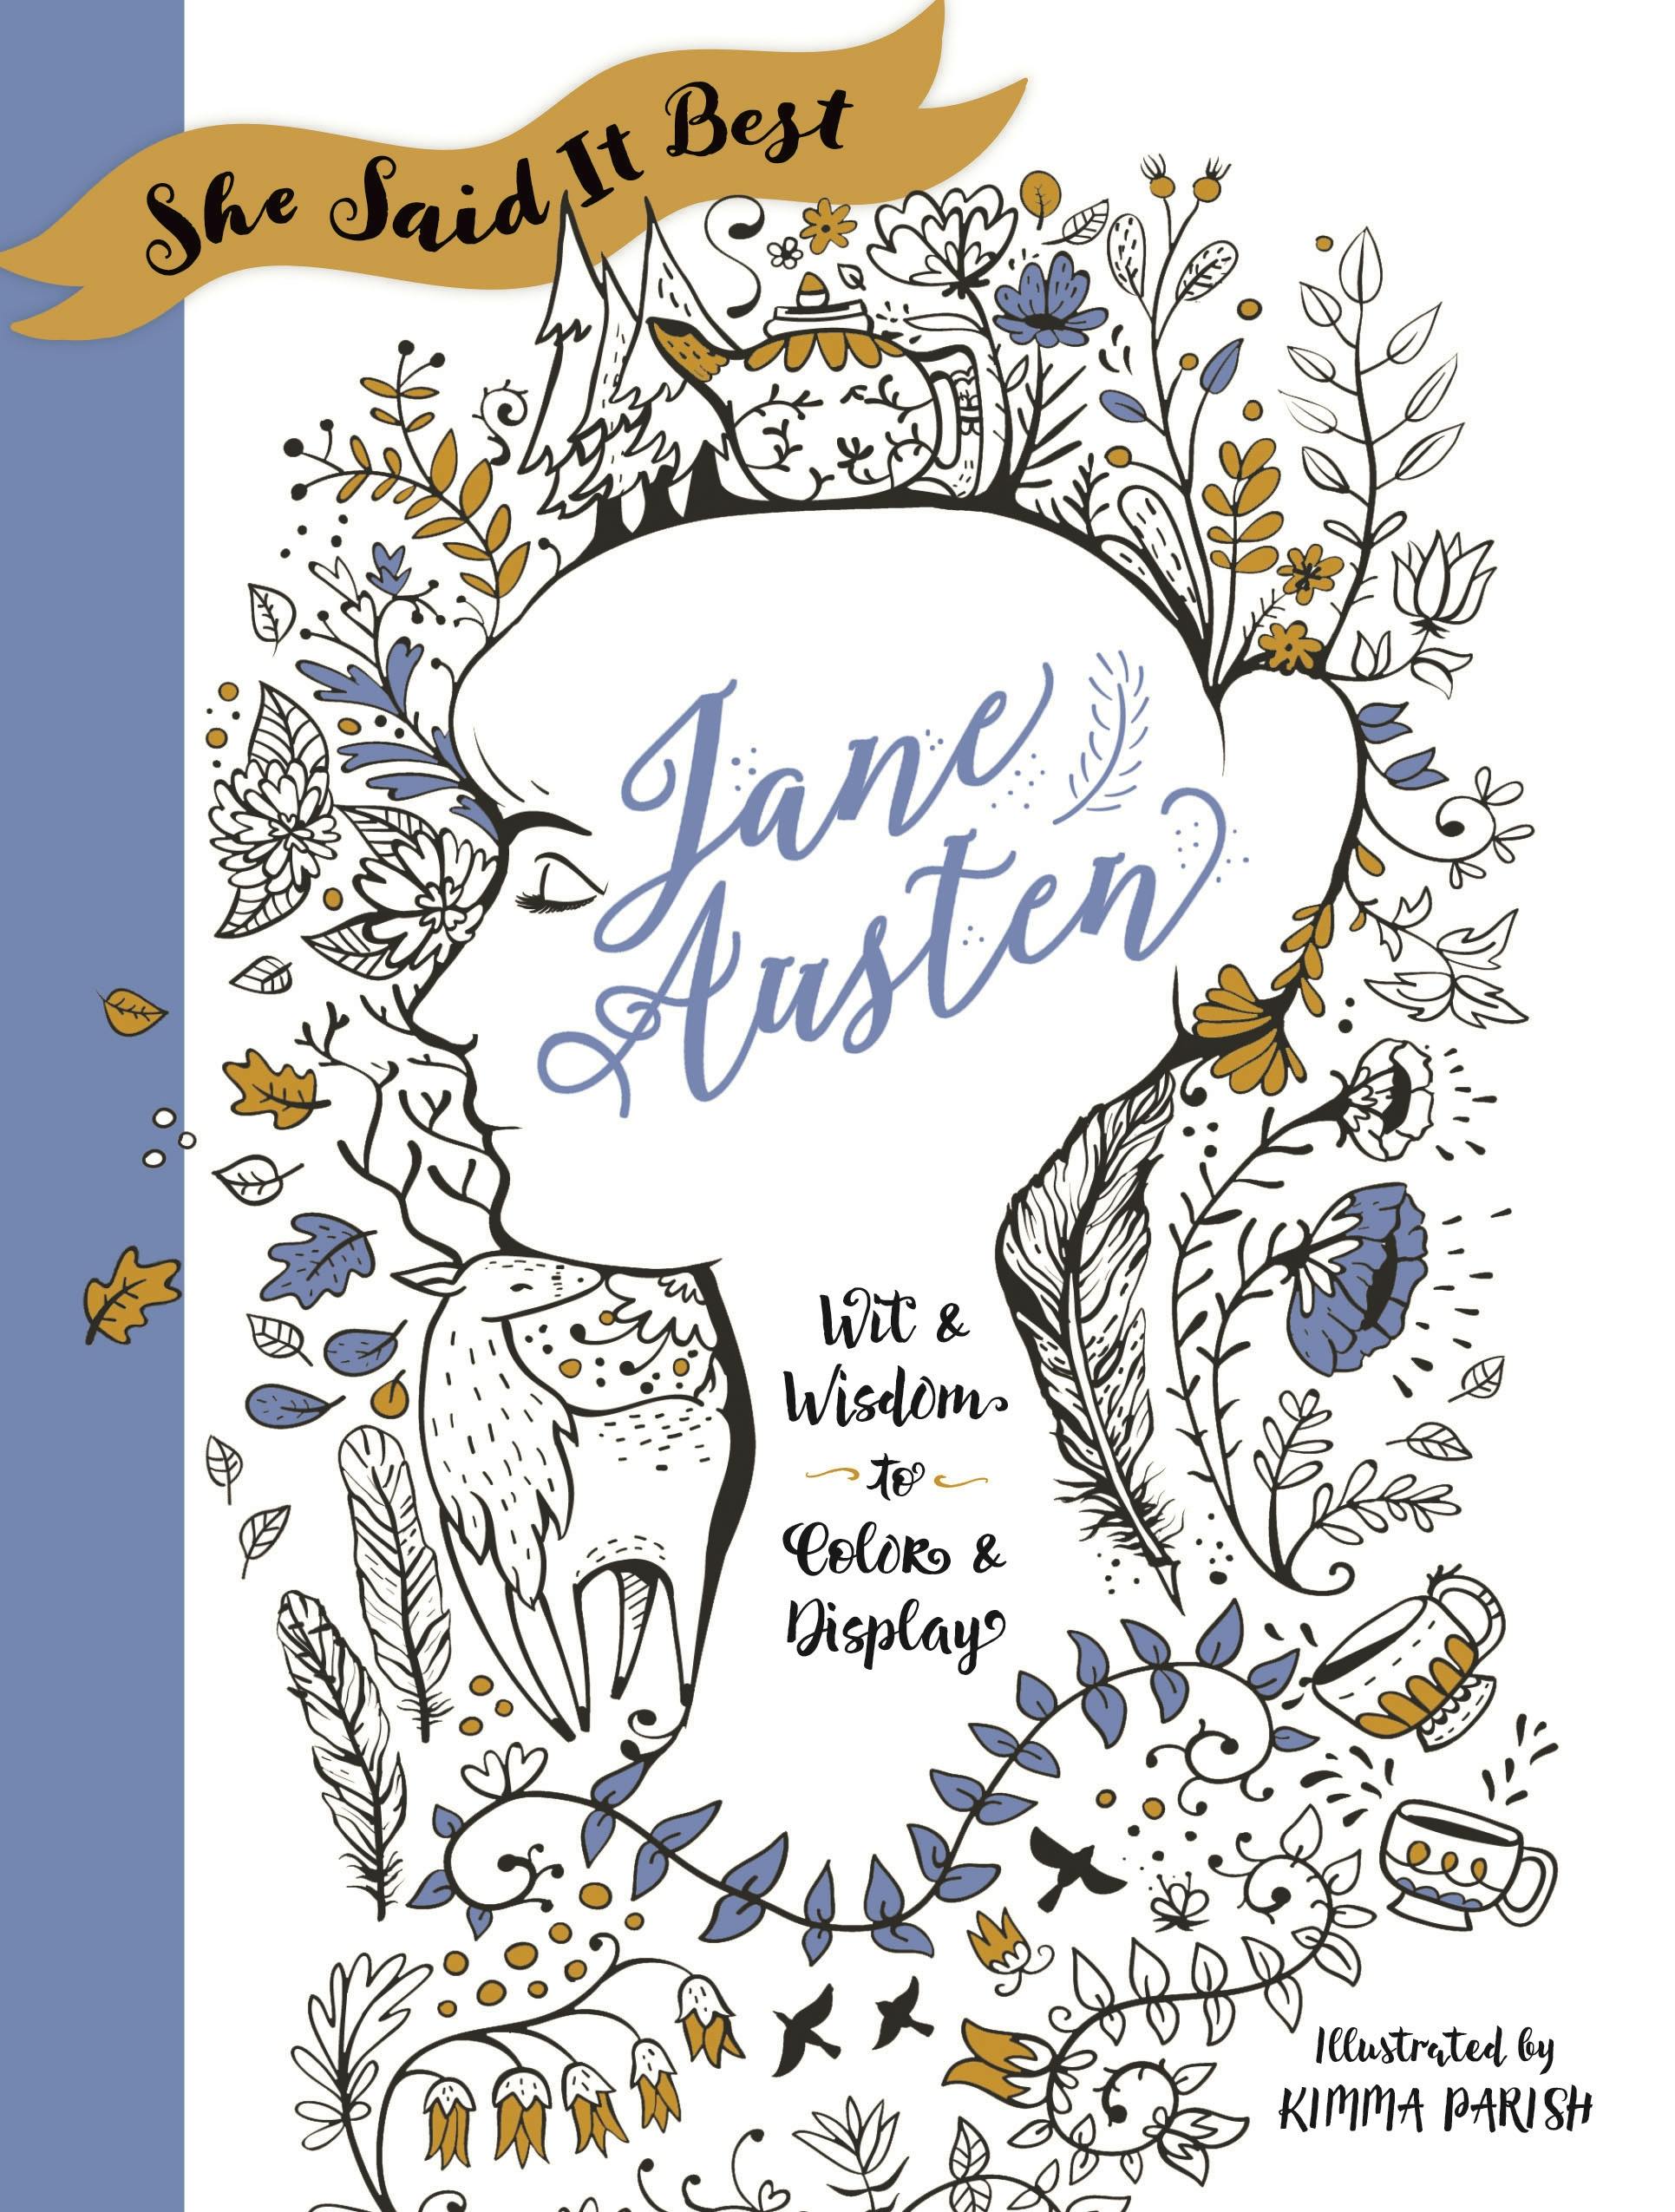 Image of She Said It Best: Jane Austen